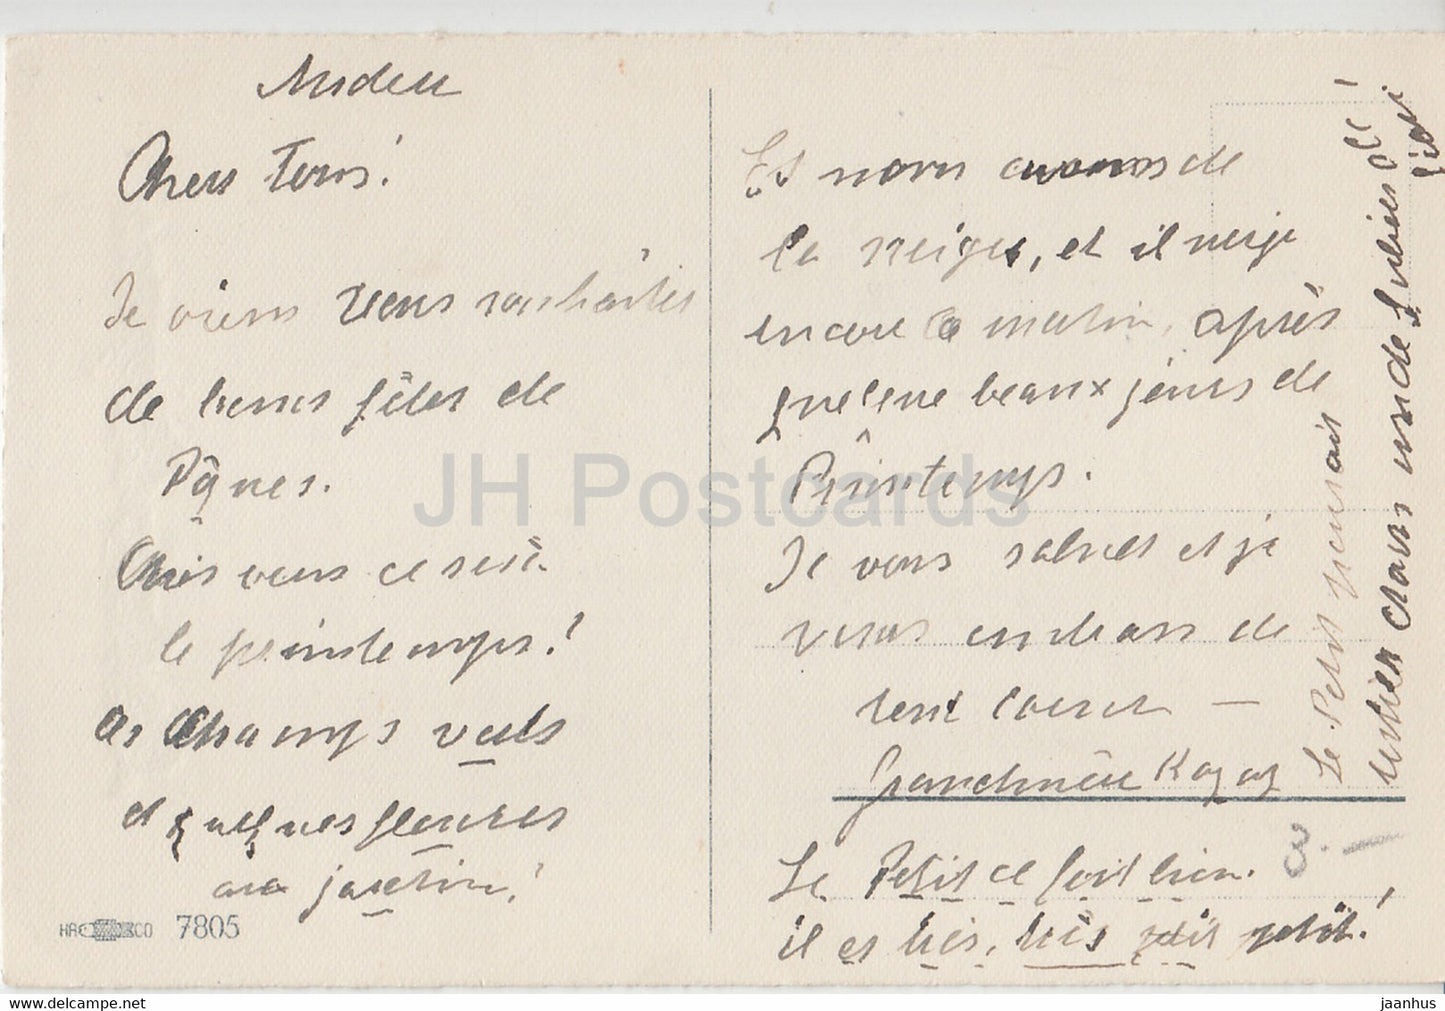 Easter Greeting Card - Die Besten Ostergrusse - boy - chicken - Probst - HA CO 7805 - old postcard - Germany - used